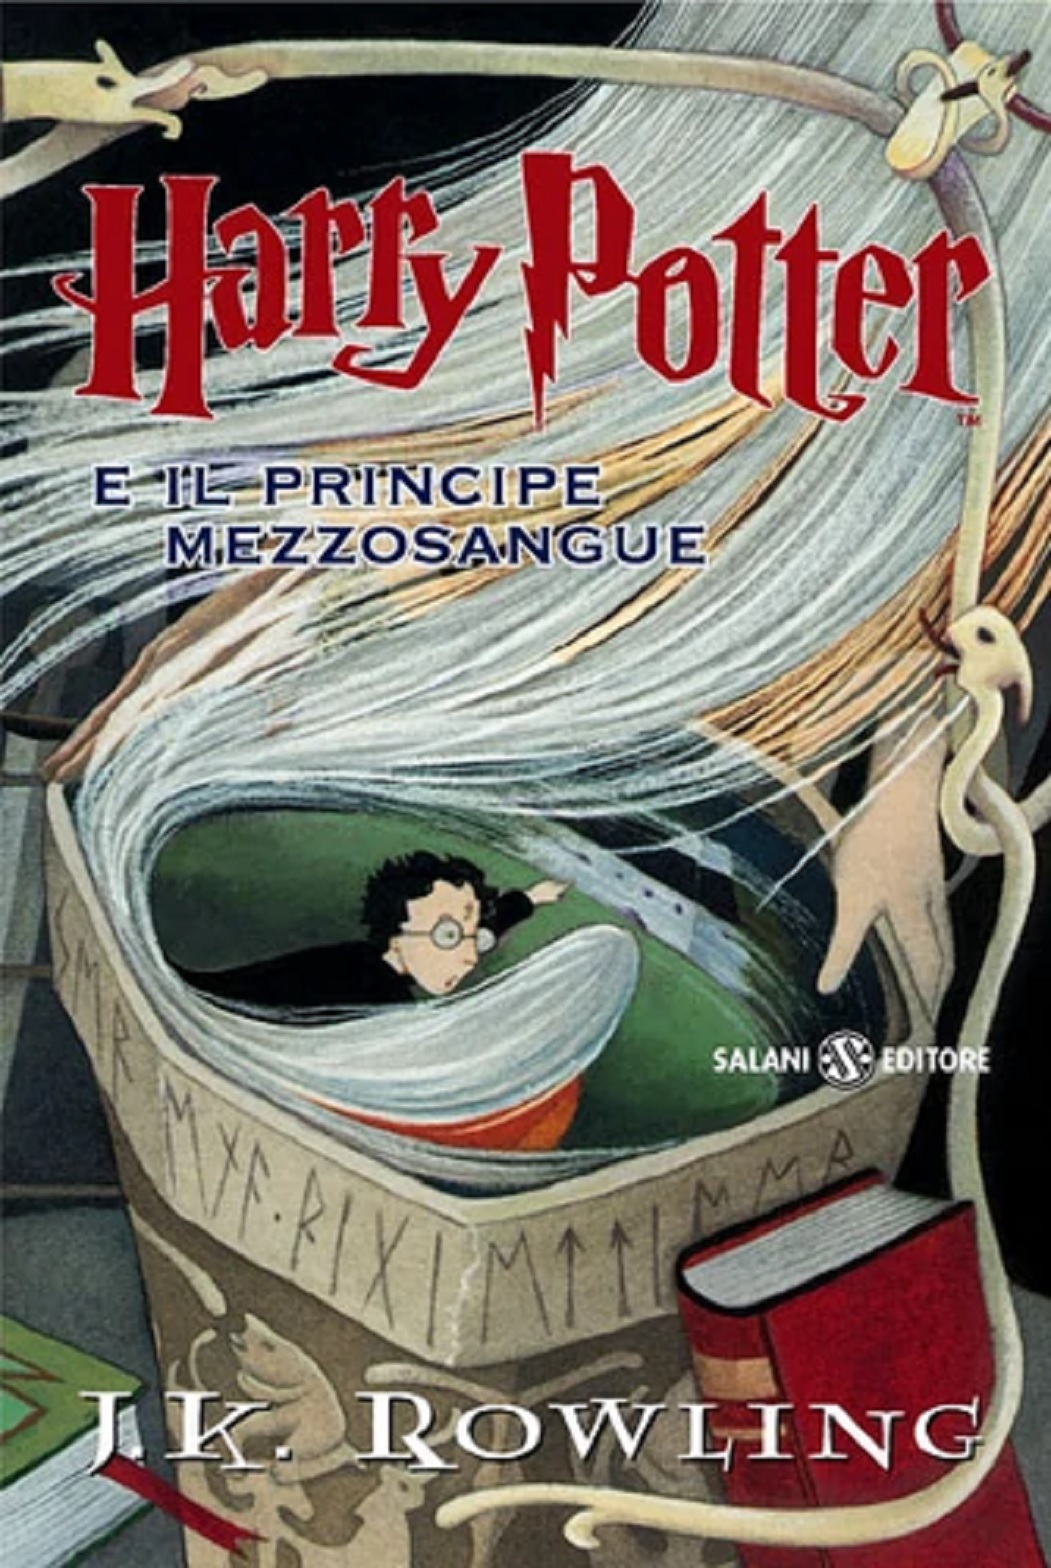 More about Harry Potter e il principe mezzosangue